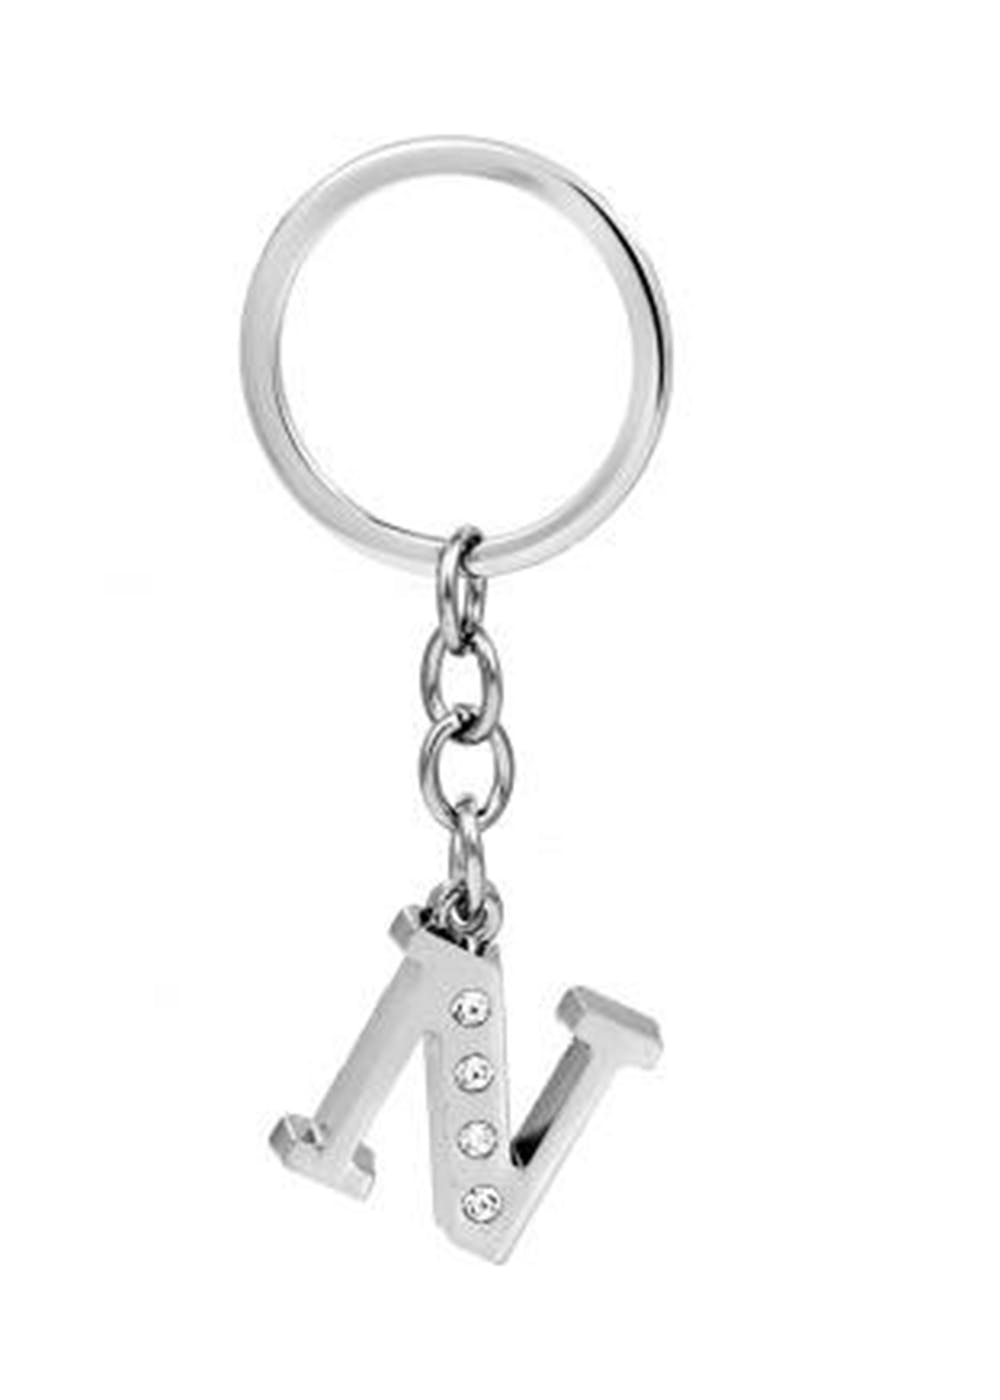 Get Metallic Alphabet Keychain - N at ₹ 189 | LBB Shop